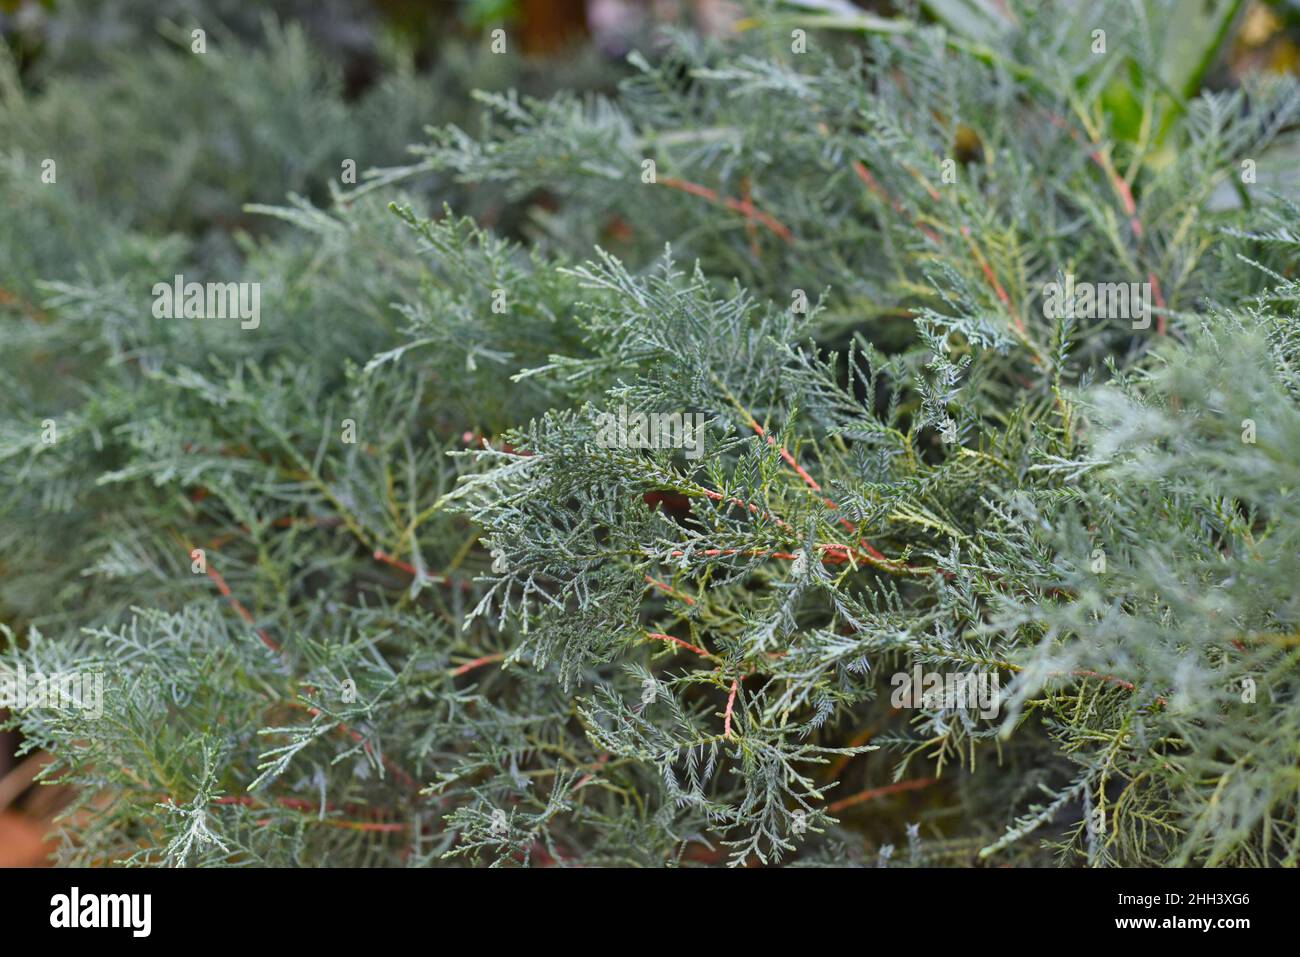 Juniperus media Pfitzeriana evergreen plant close up Stock Photo